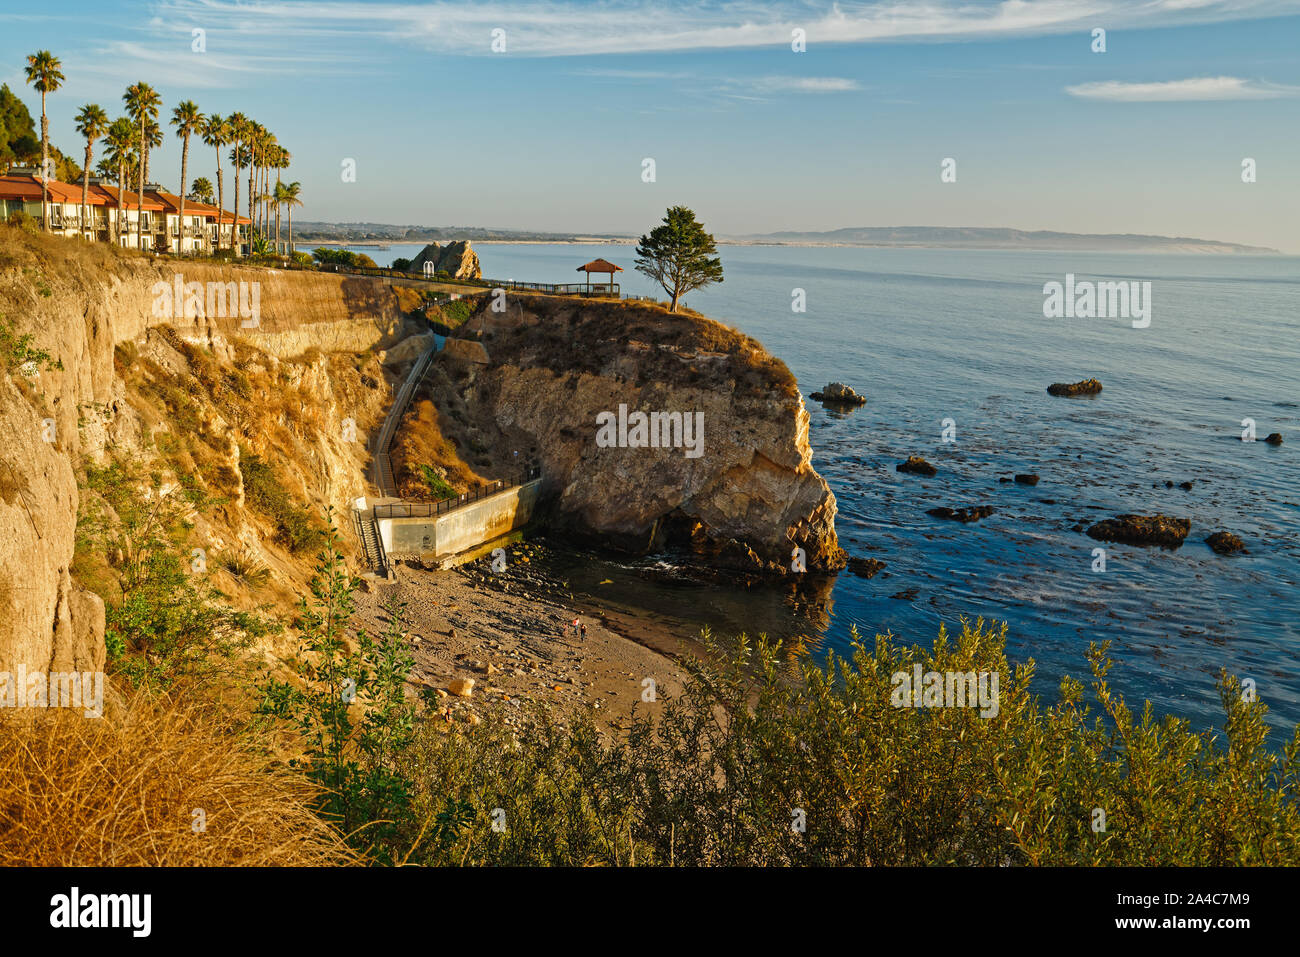 Pismo Beach Cliffs and Shore Cliffs Hotel at sunset, California Coastline Stock Photo